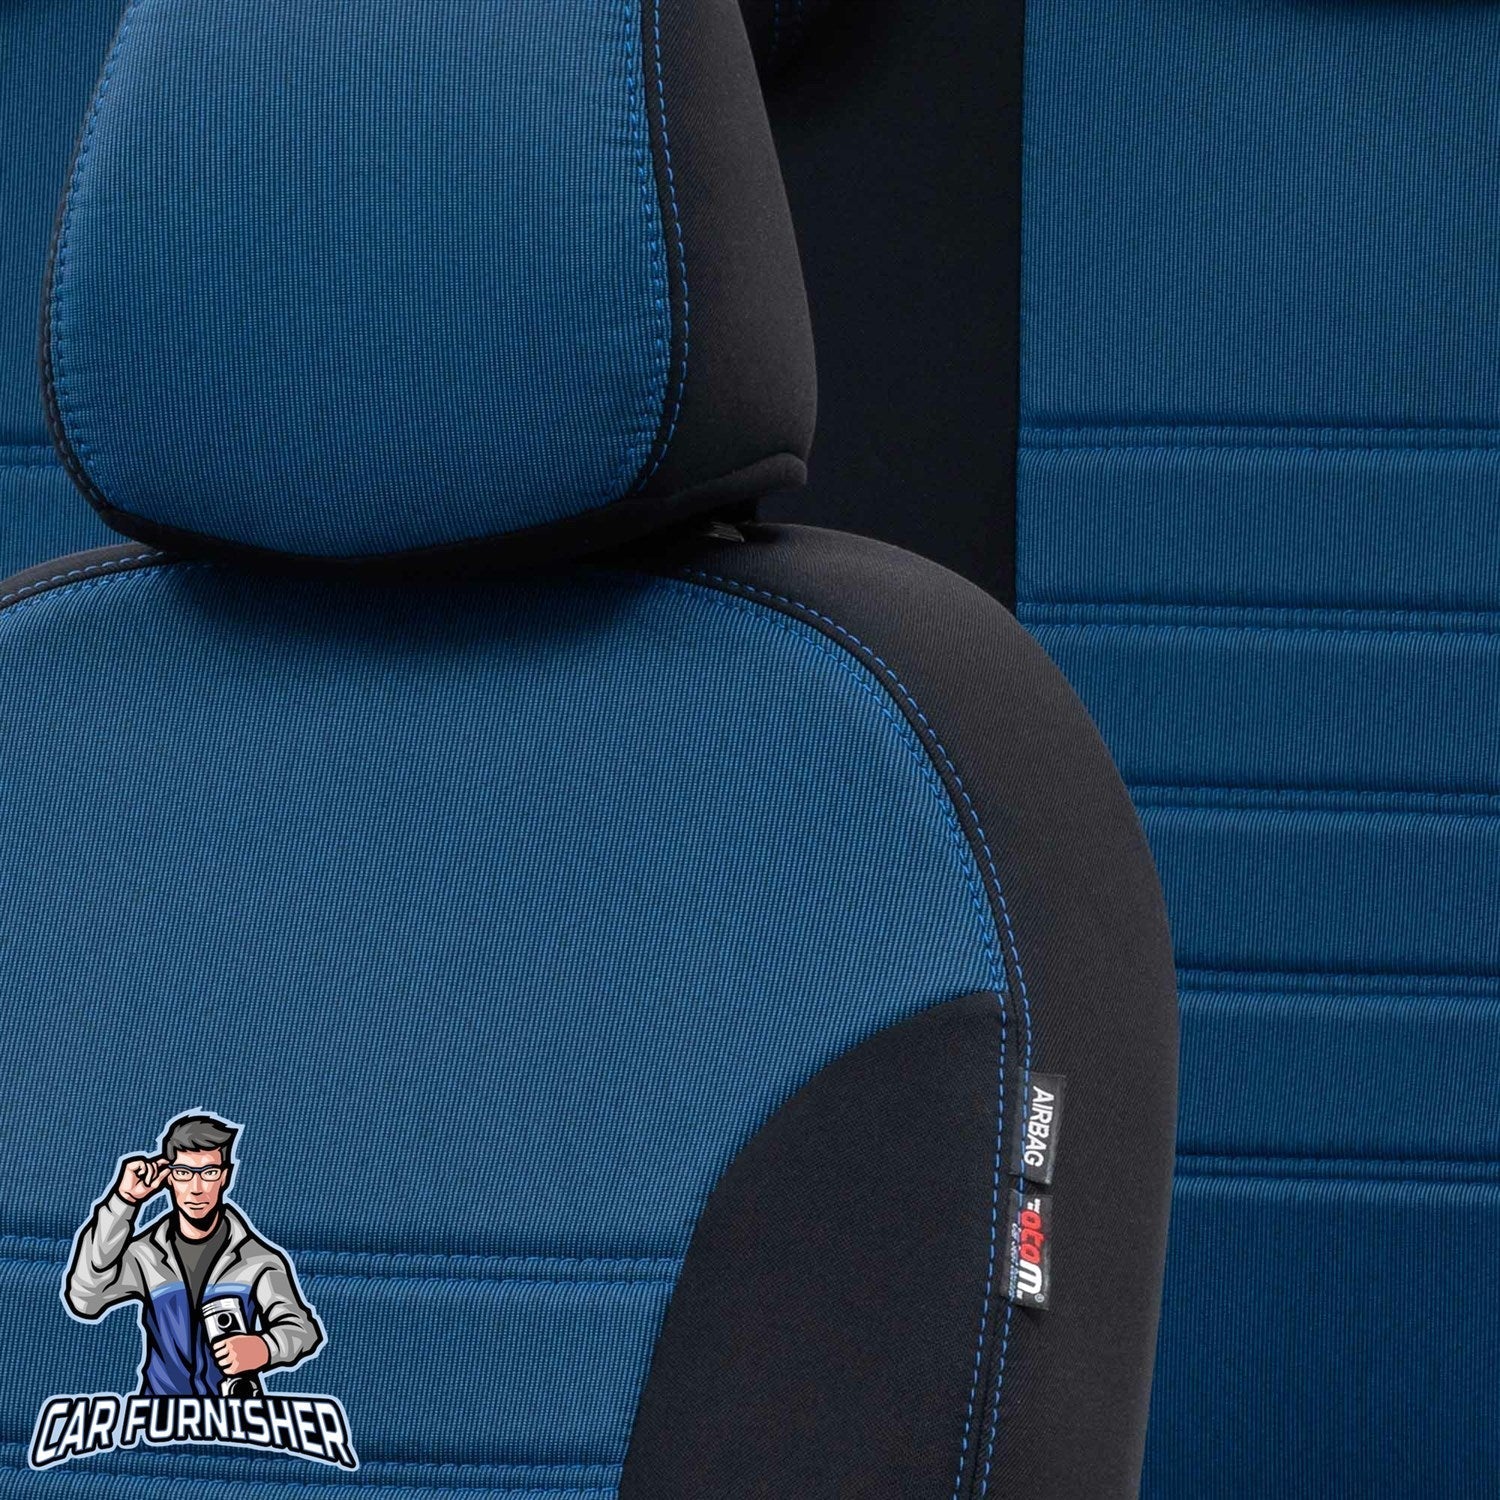 Daewoo Tacuma Seat Covers Original Jacquard Design Blue Jacquard Fabric